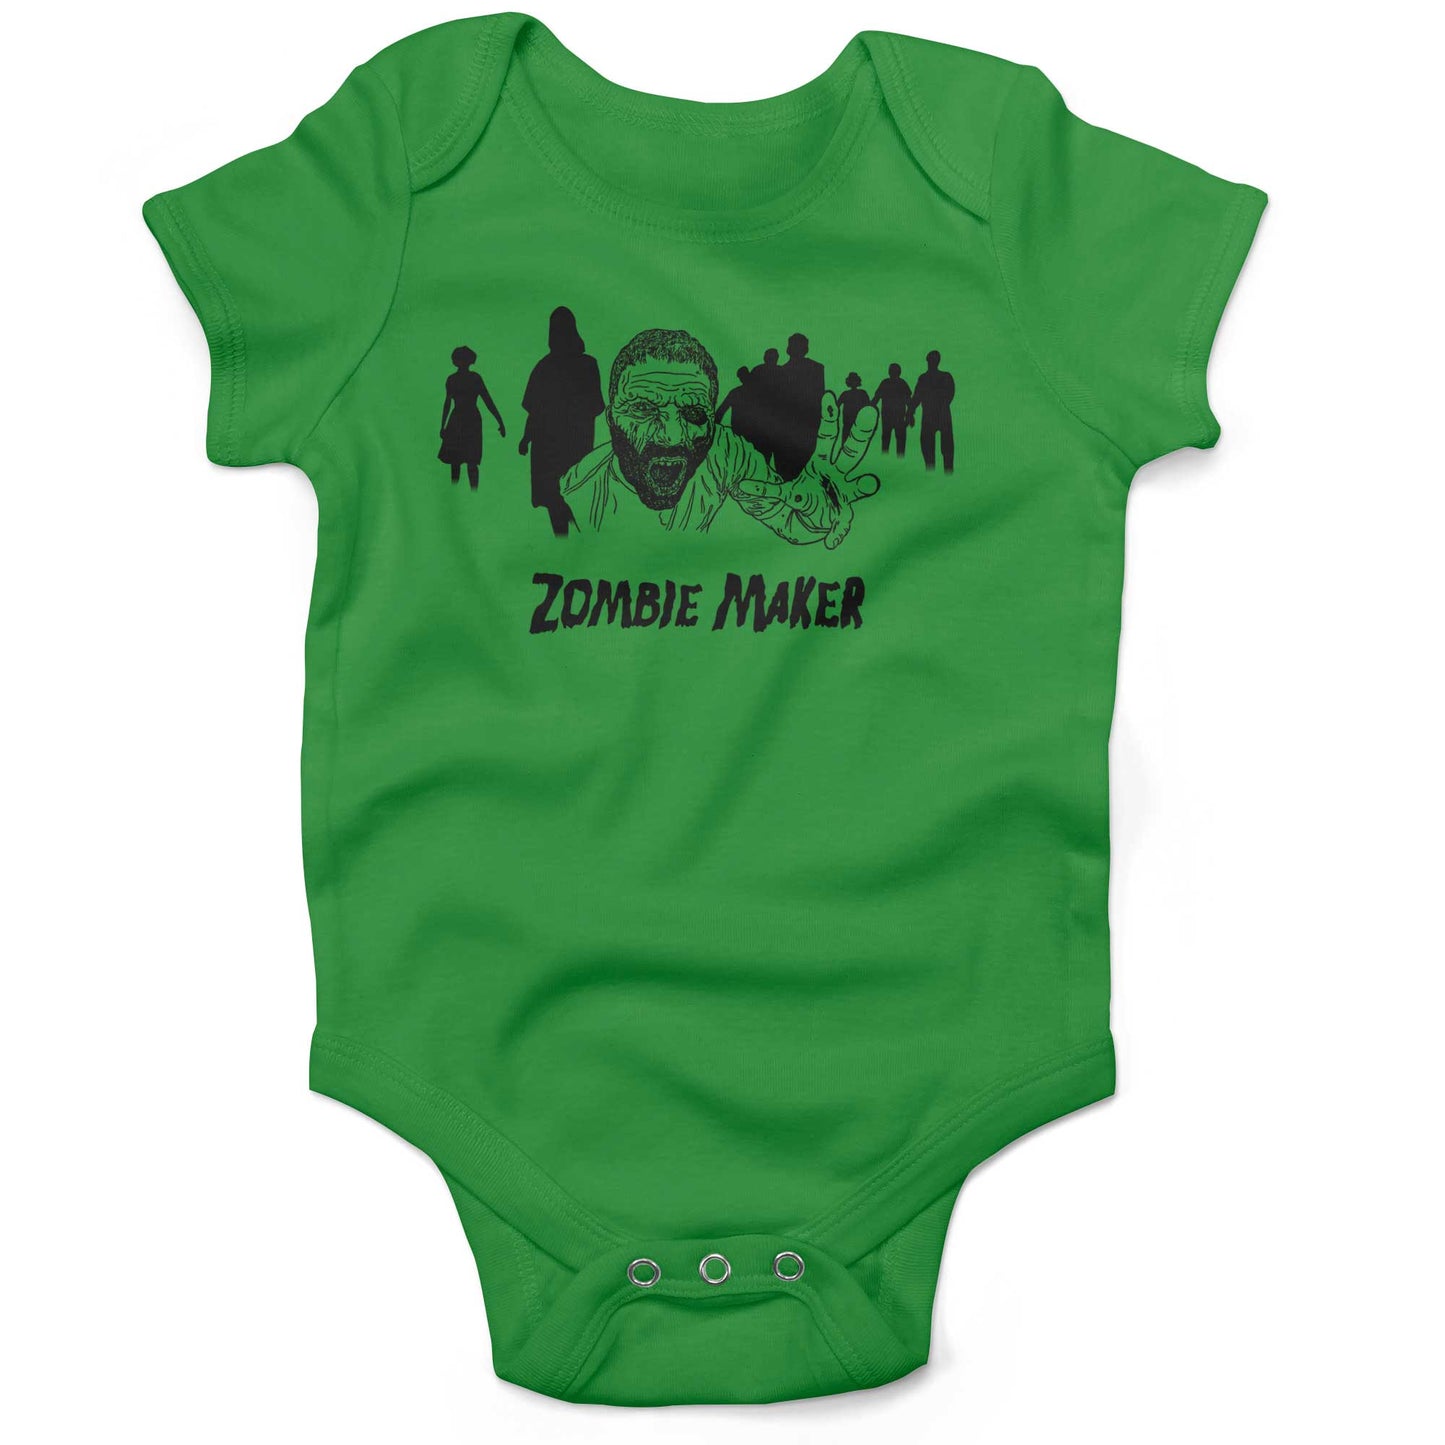 Zombie Maker Infant Bodysuit or Raglan Baby Tee-Grass Green-3-6 months